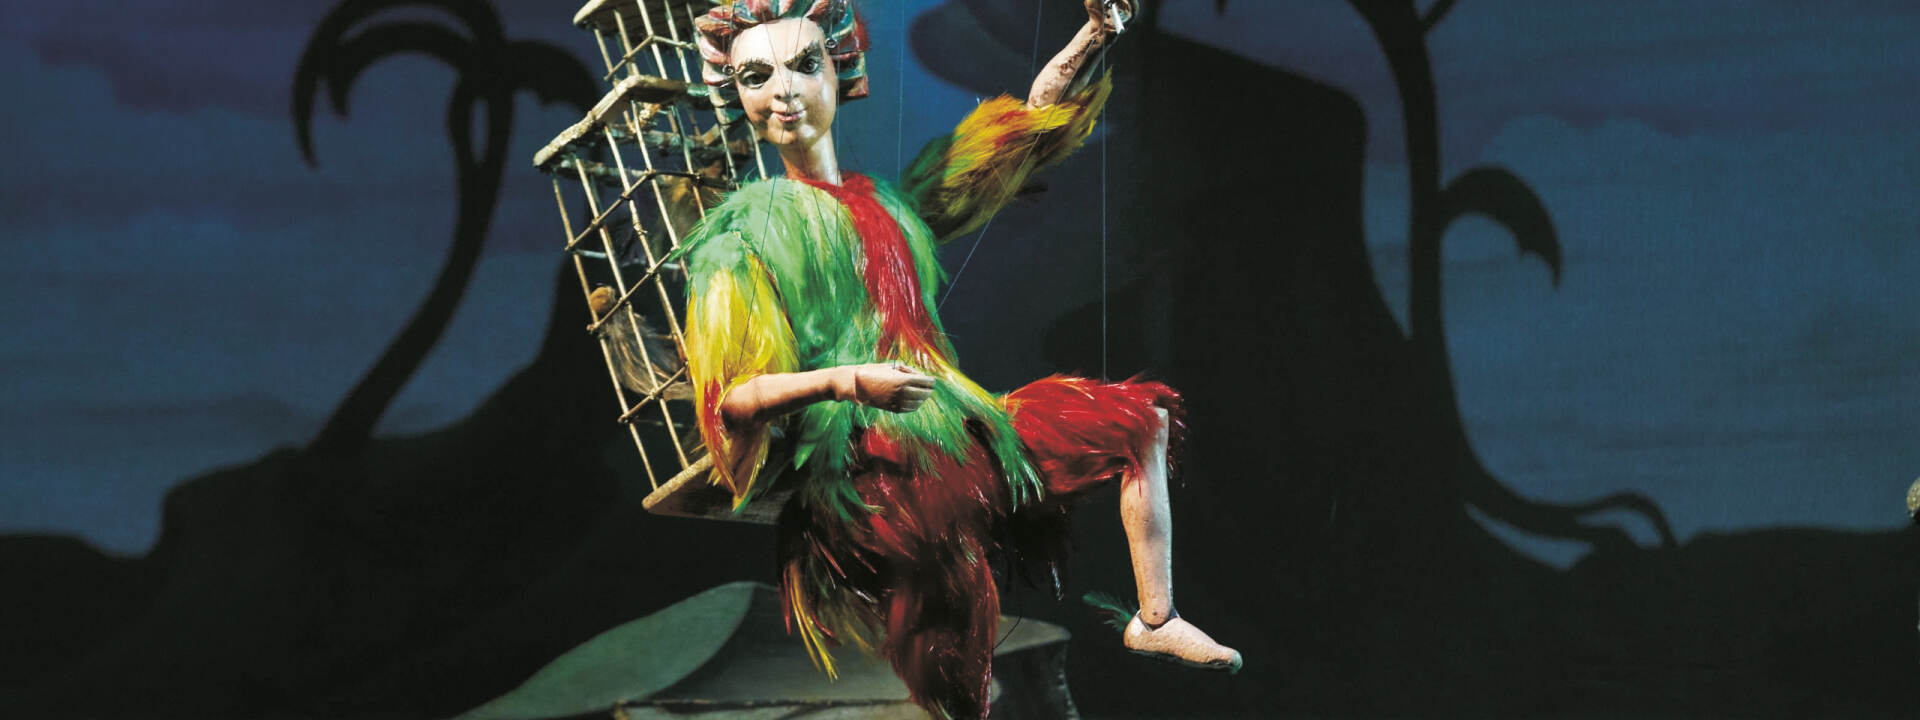 Salzburg Marionette Theatre - The Magic Flute © Marionettentheater & TSG